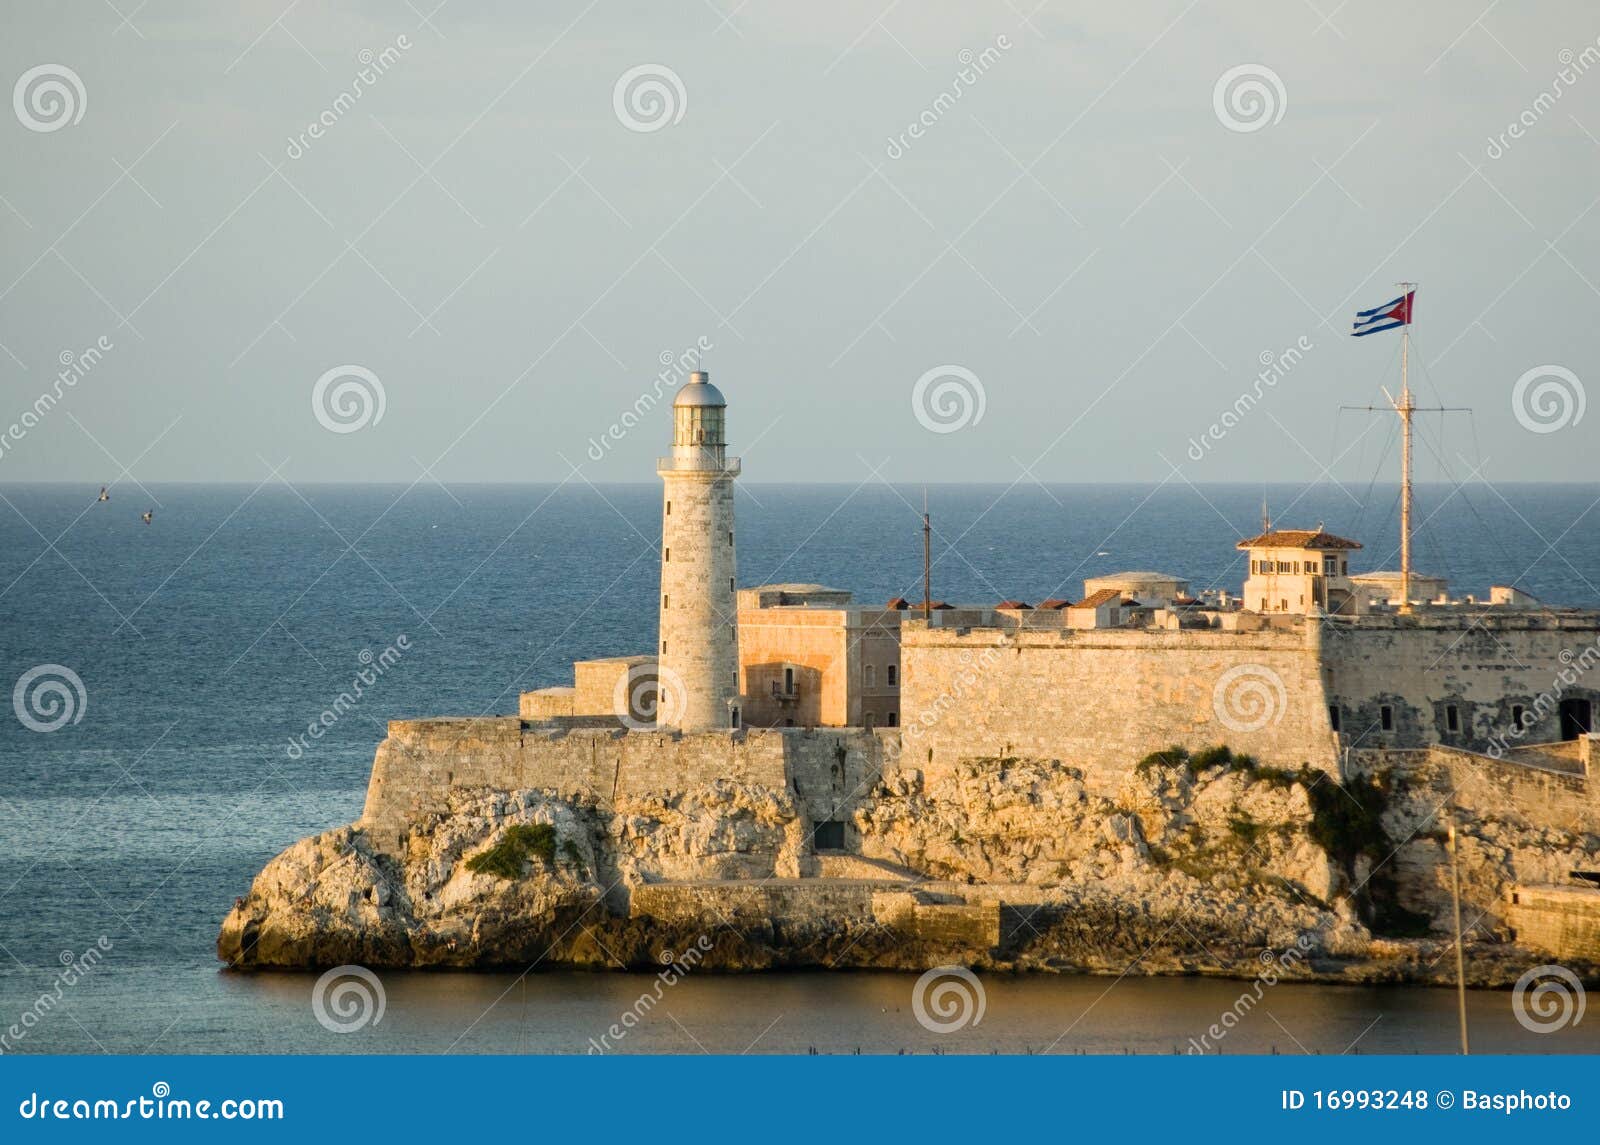 El morro castle havana harbor hi-res stock photography and images - Alamy